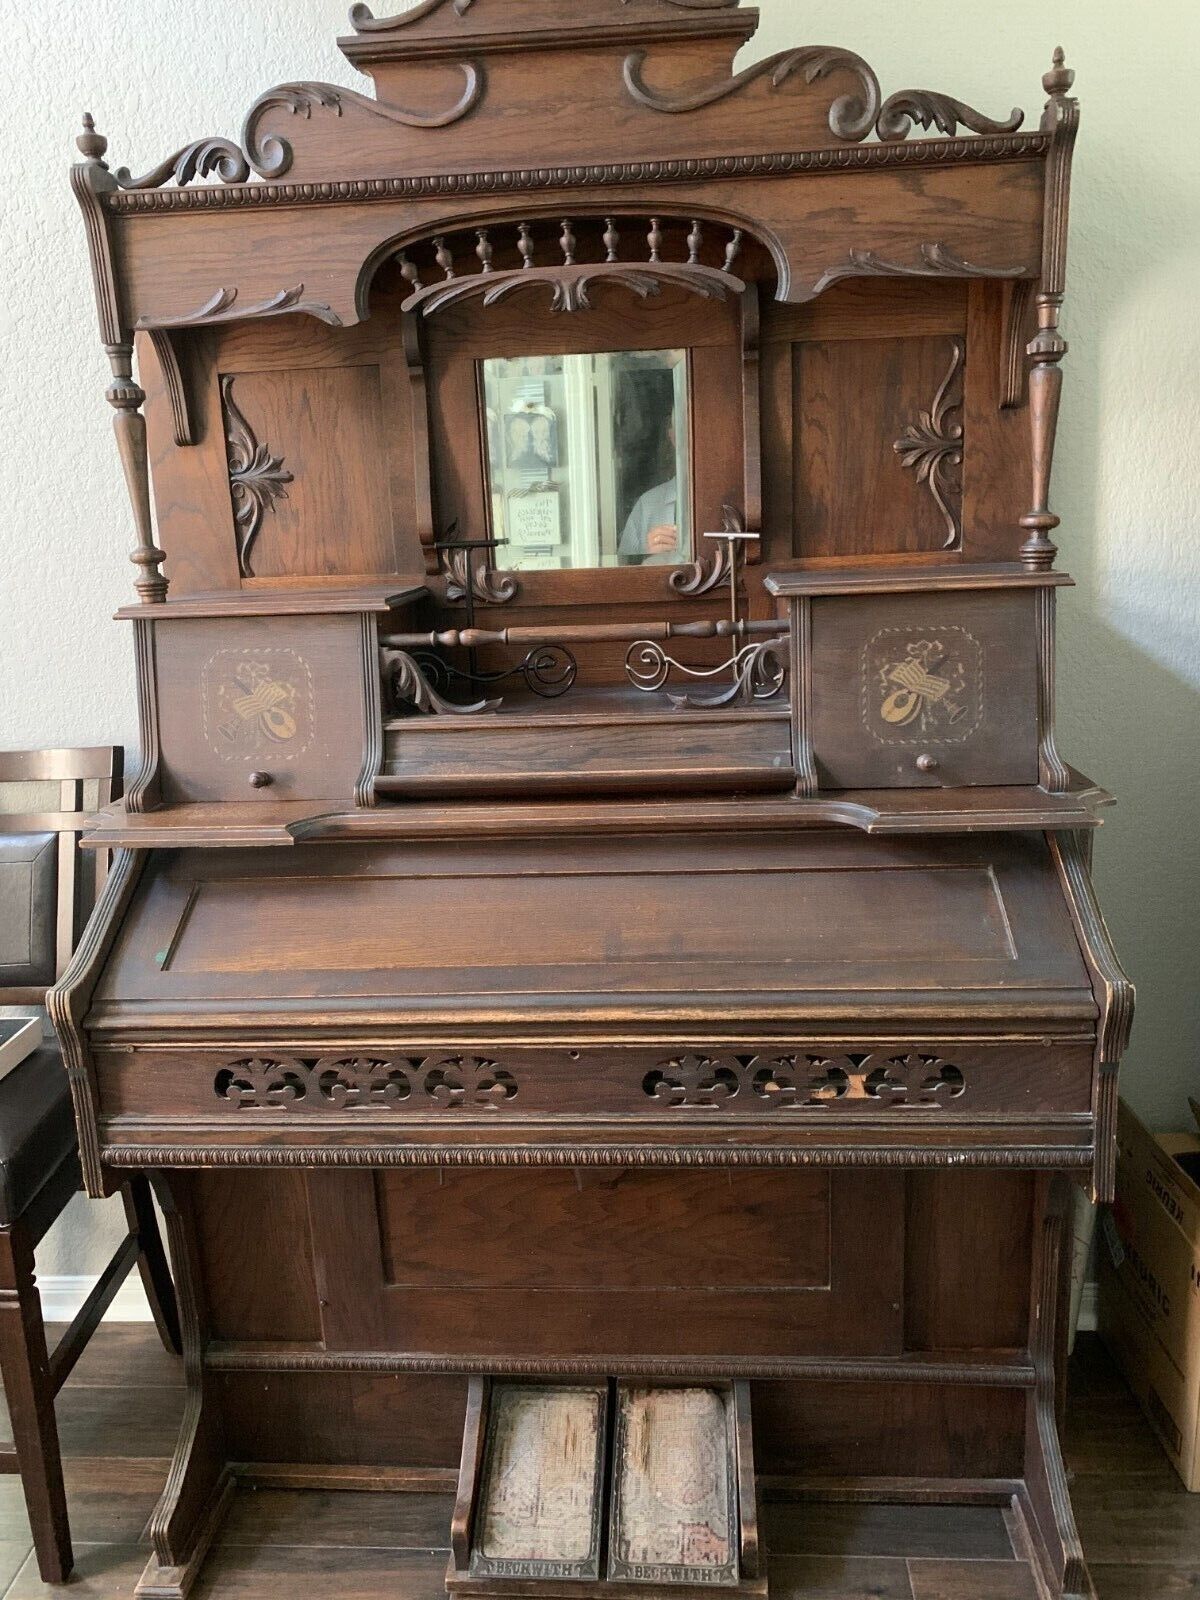 1907 Antique Beckwith Pump Organ